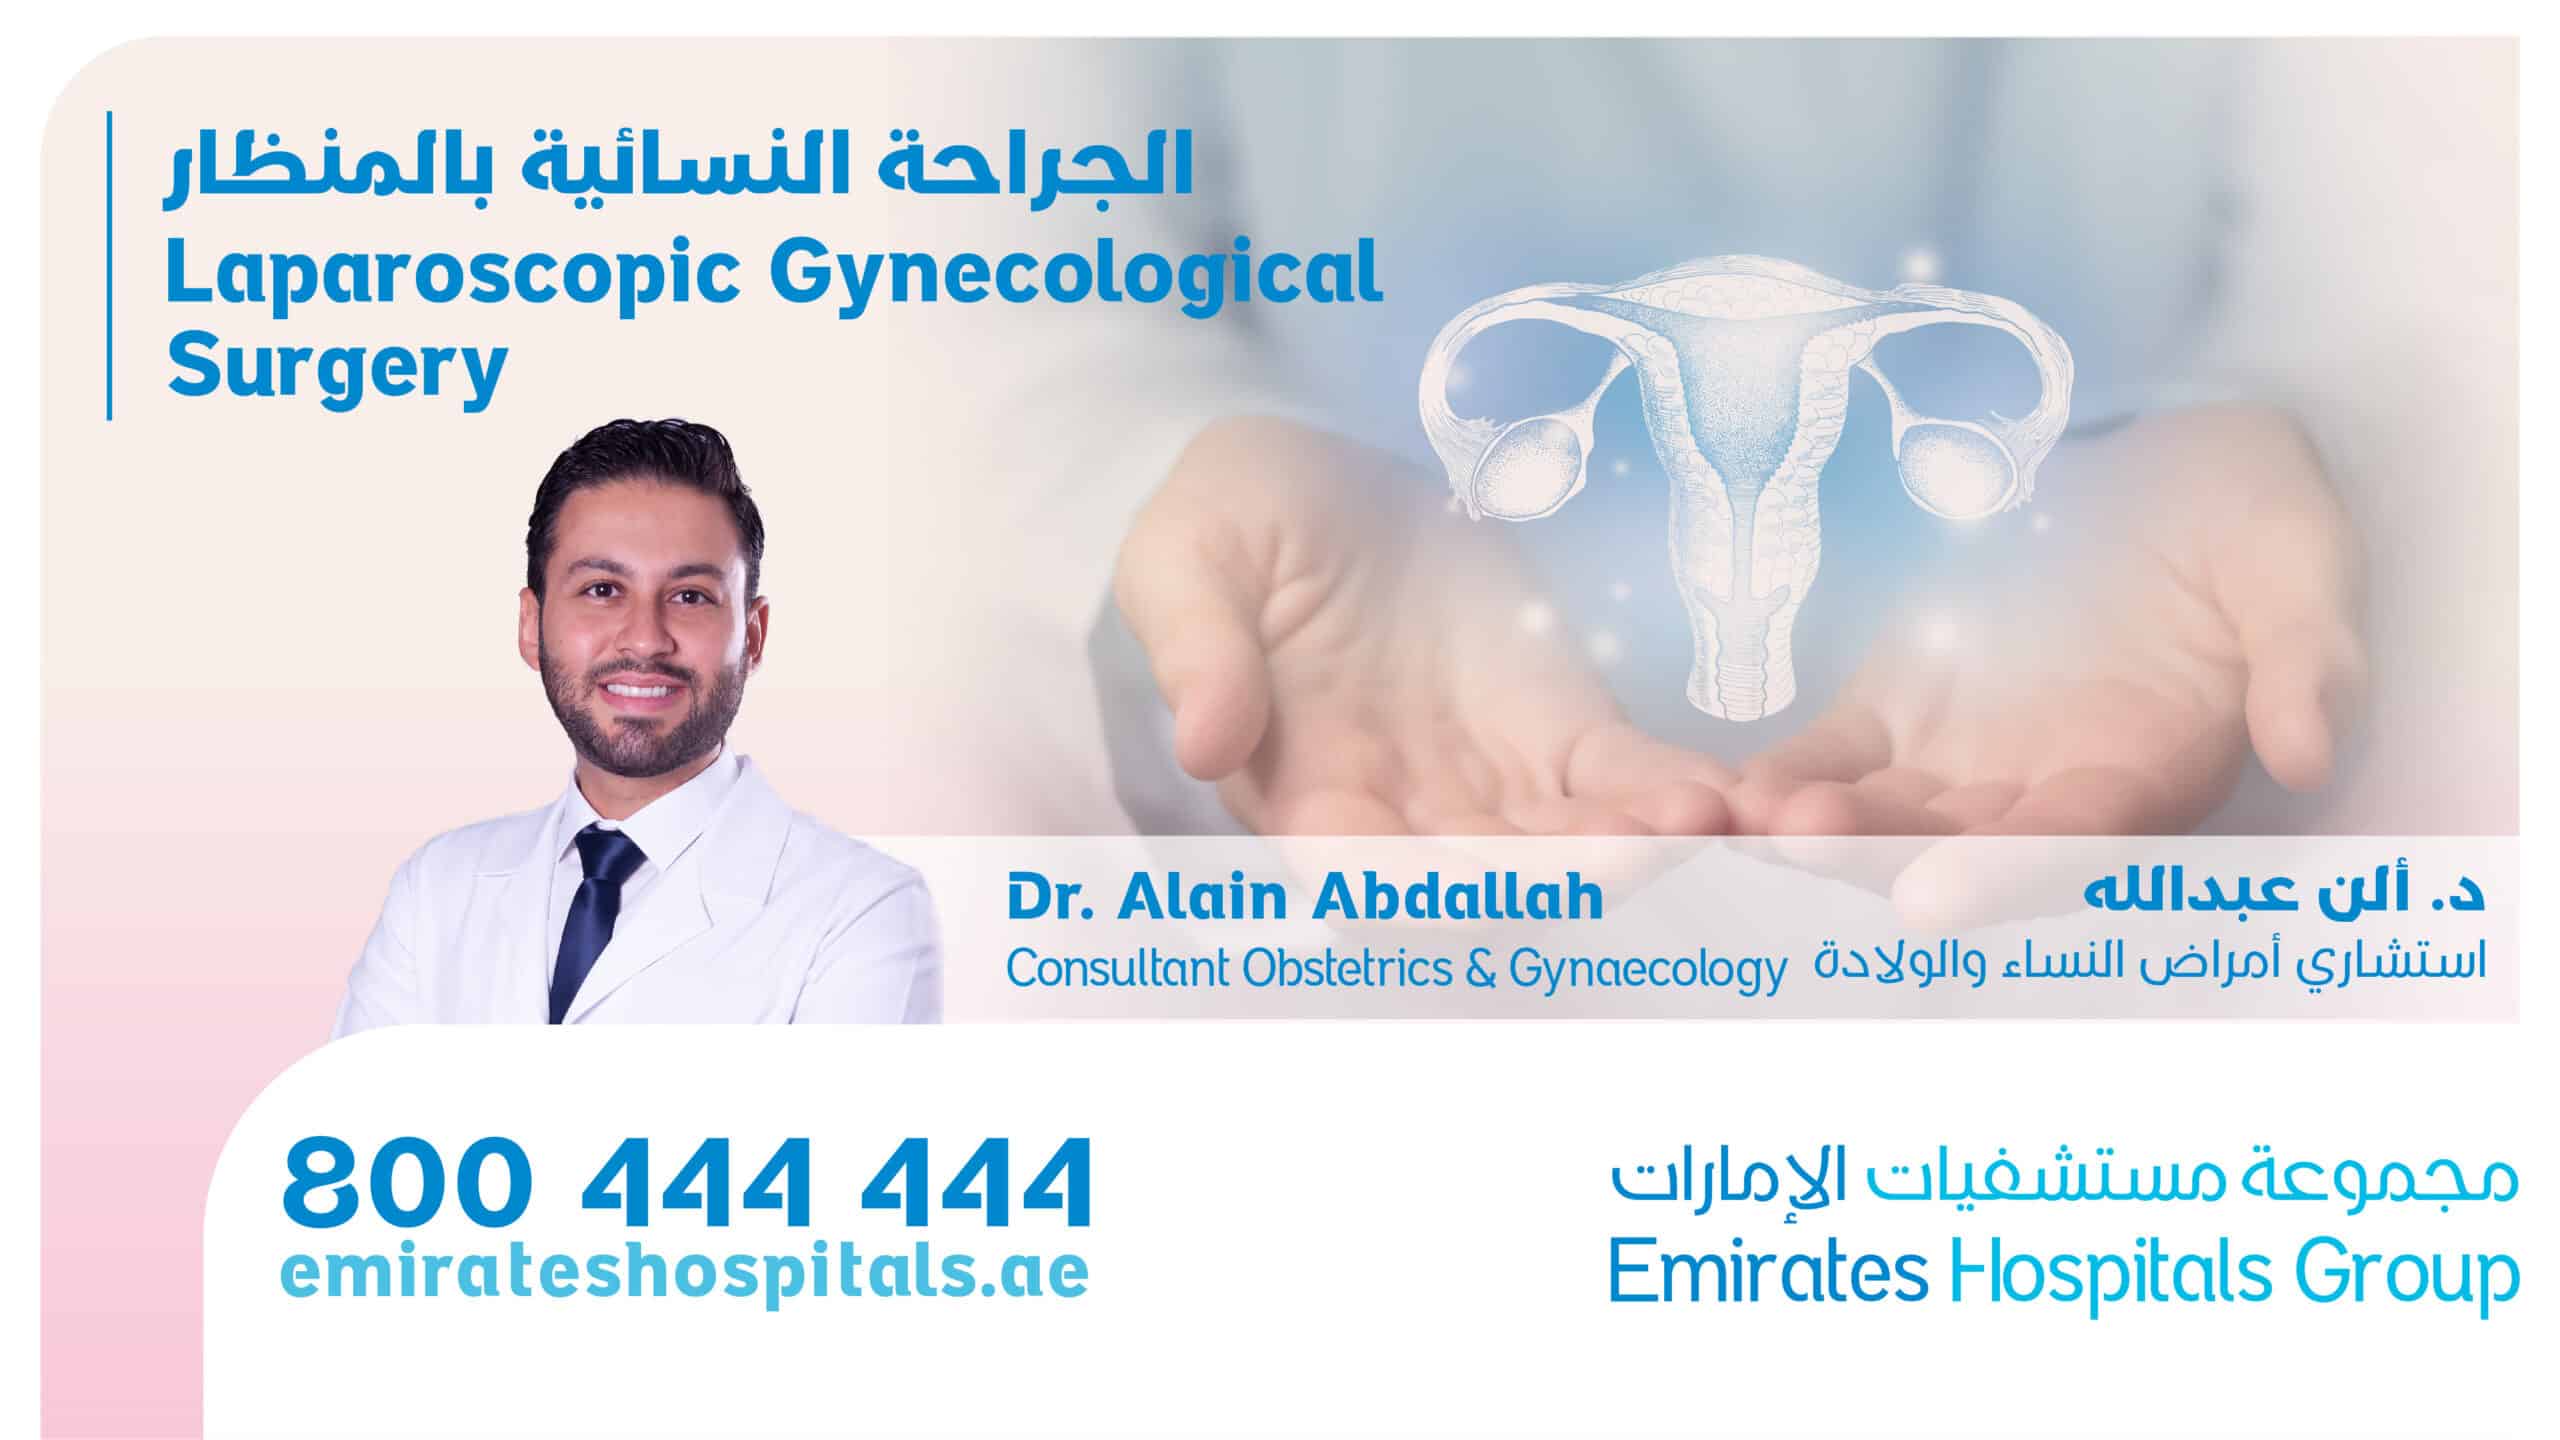 Laparoscopic Gynecological Surgery - Dr. Alain Abdallah, Consultant Obstetrics & Gynaecology